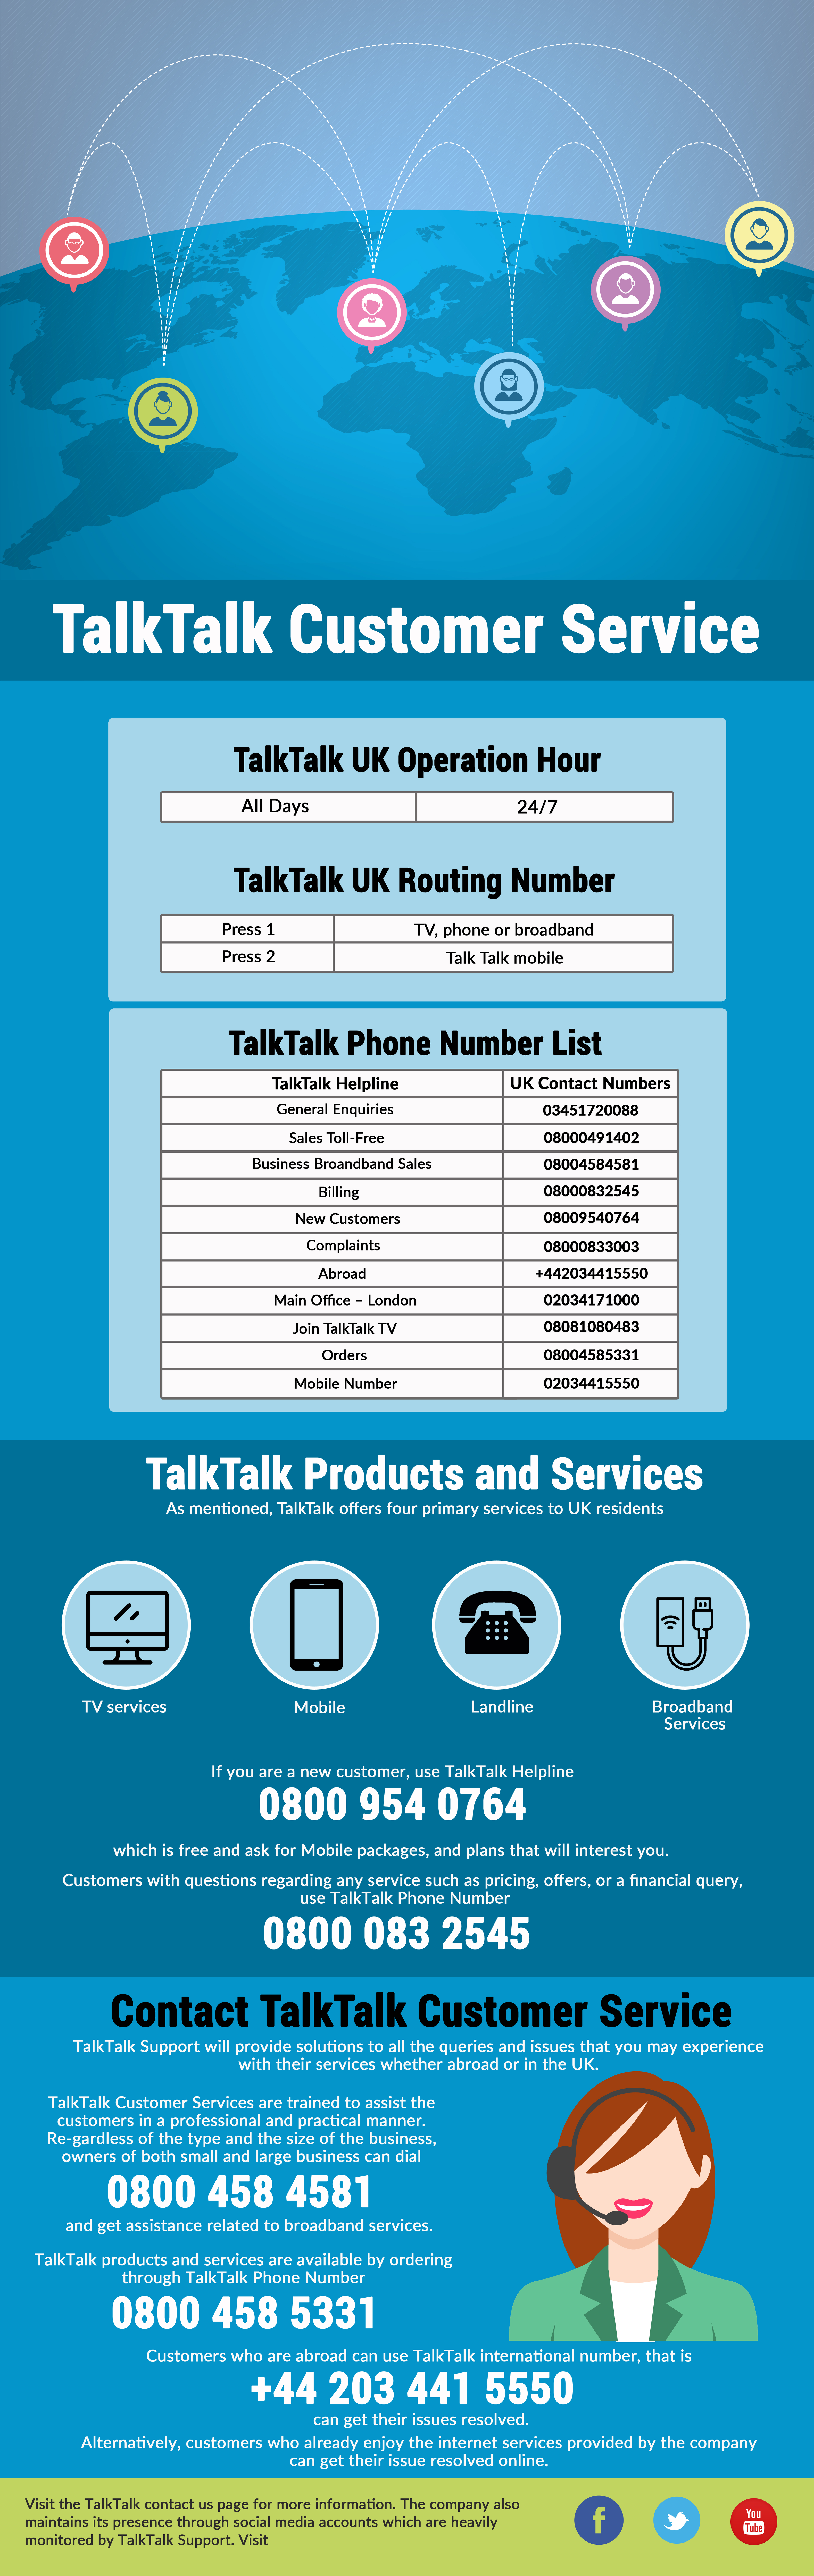 TalkTalk Helpline